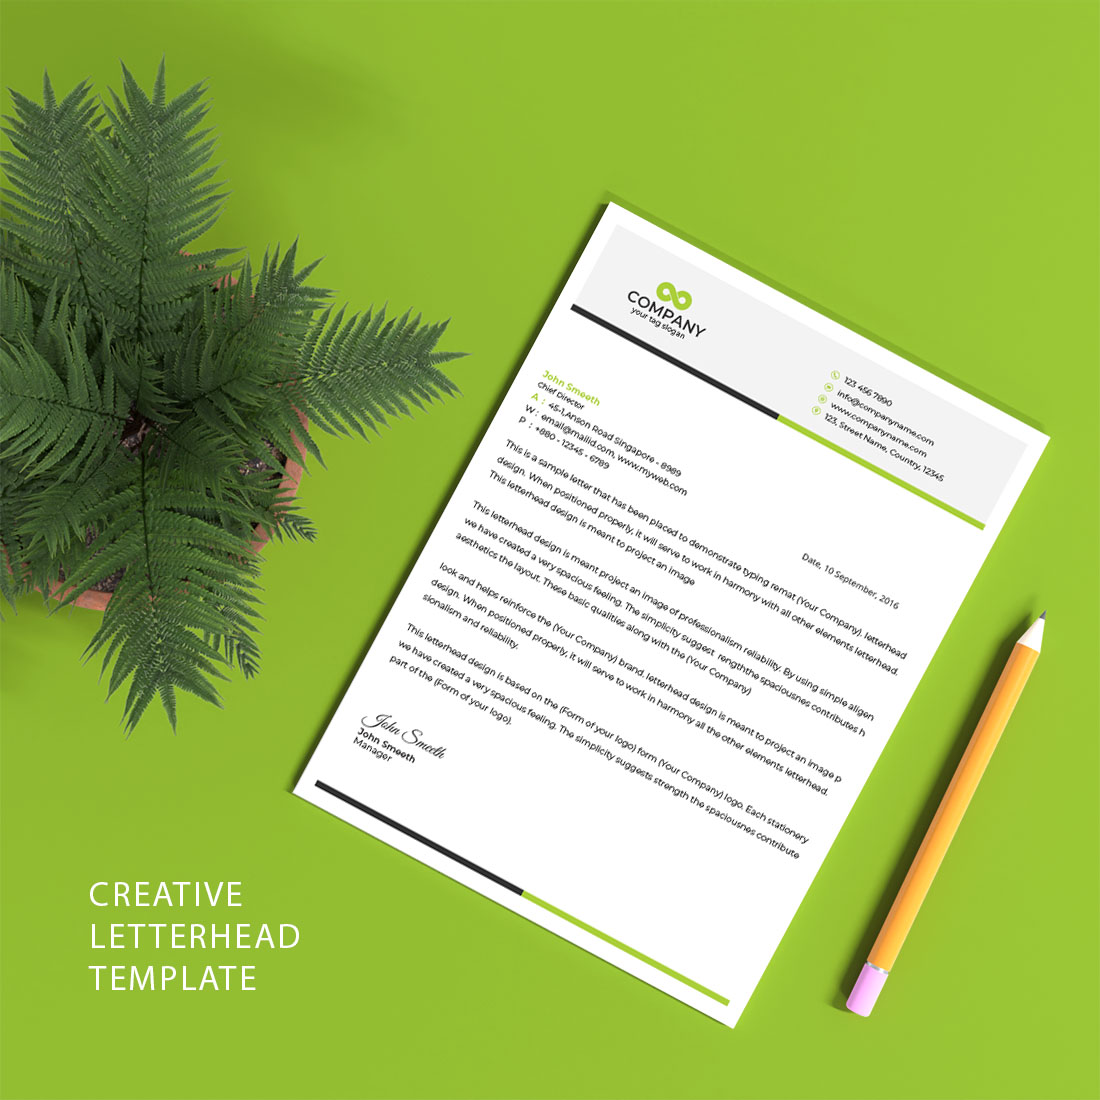 Corporate Letterhead Design Template cover image.